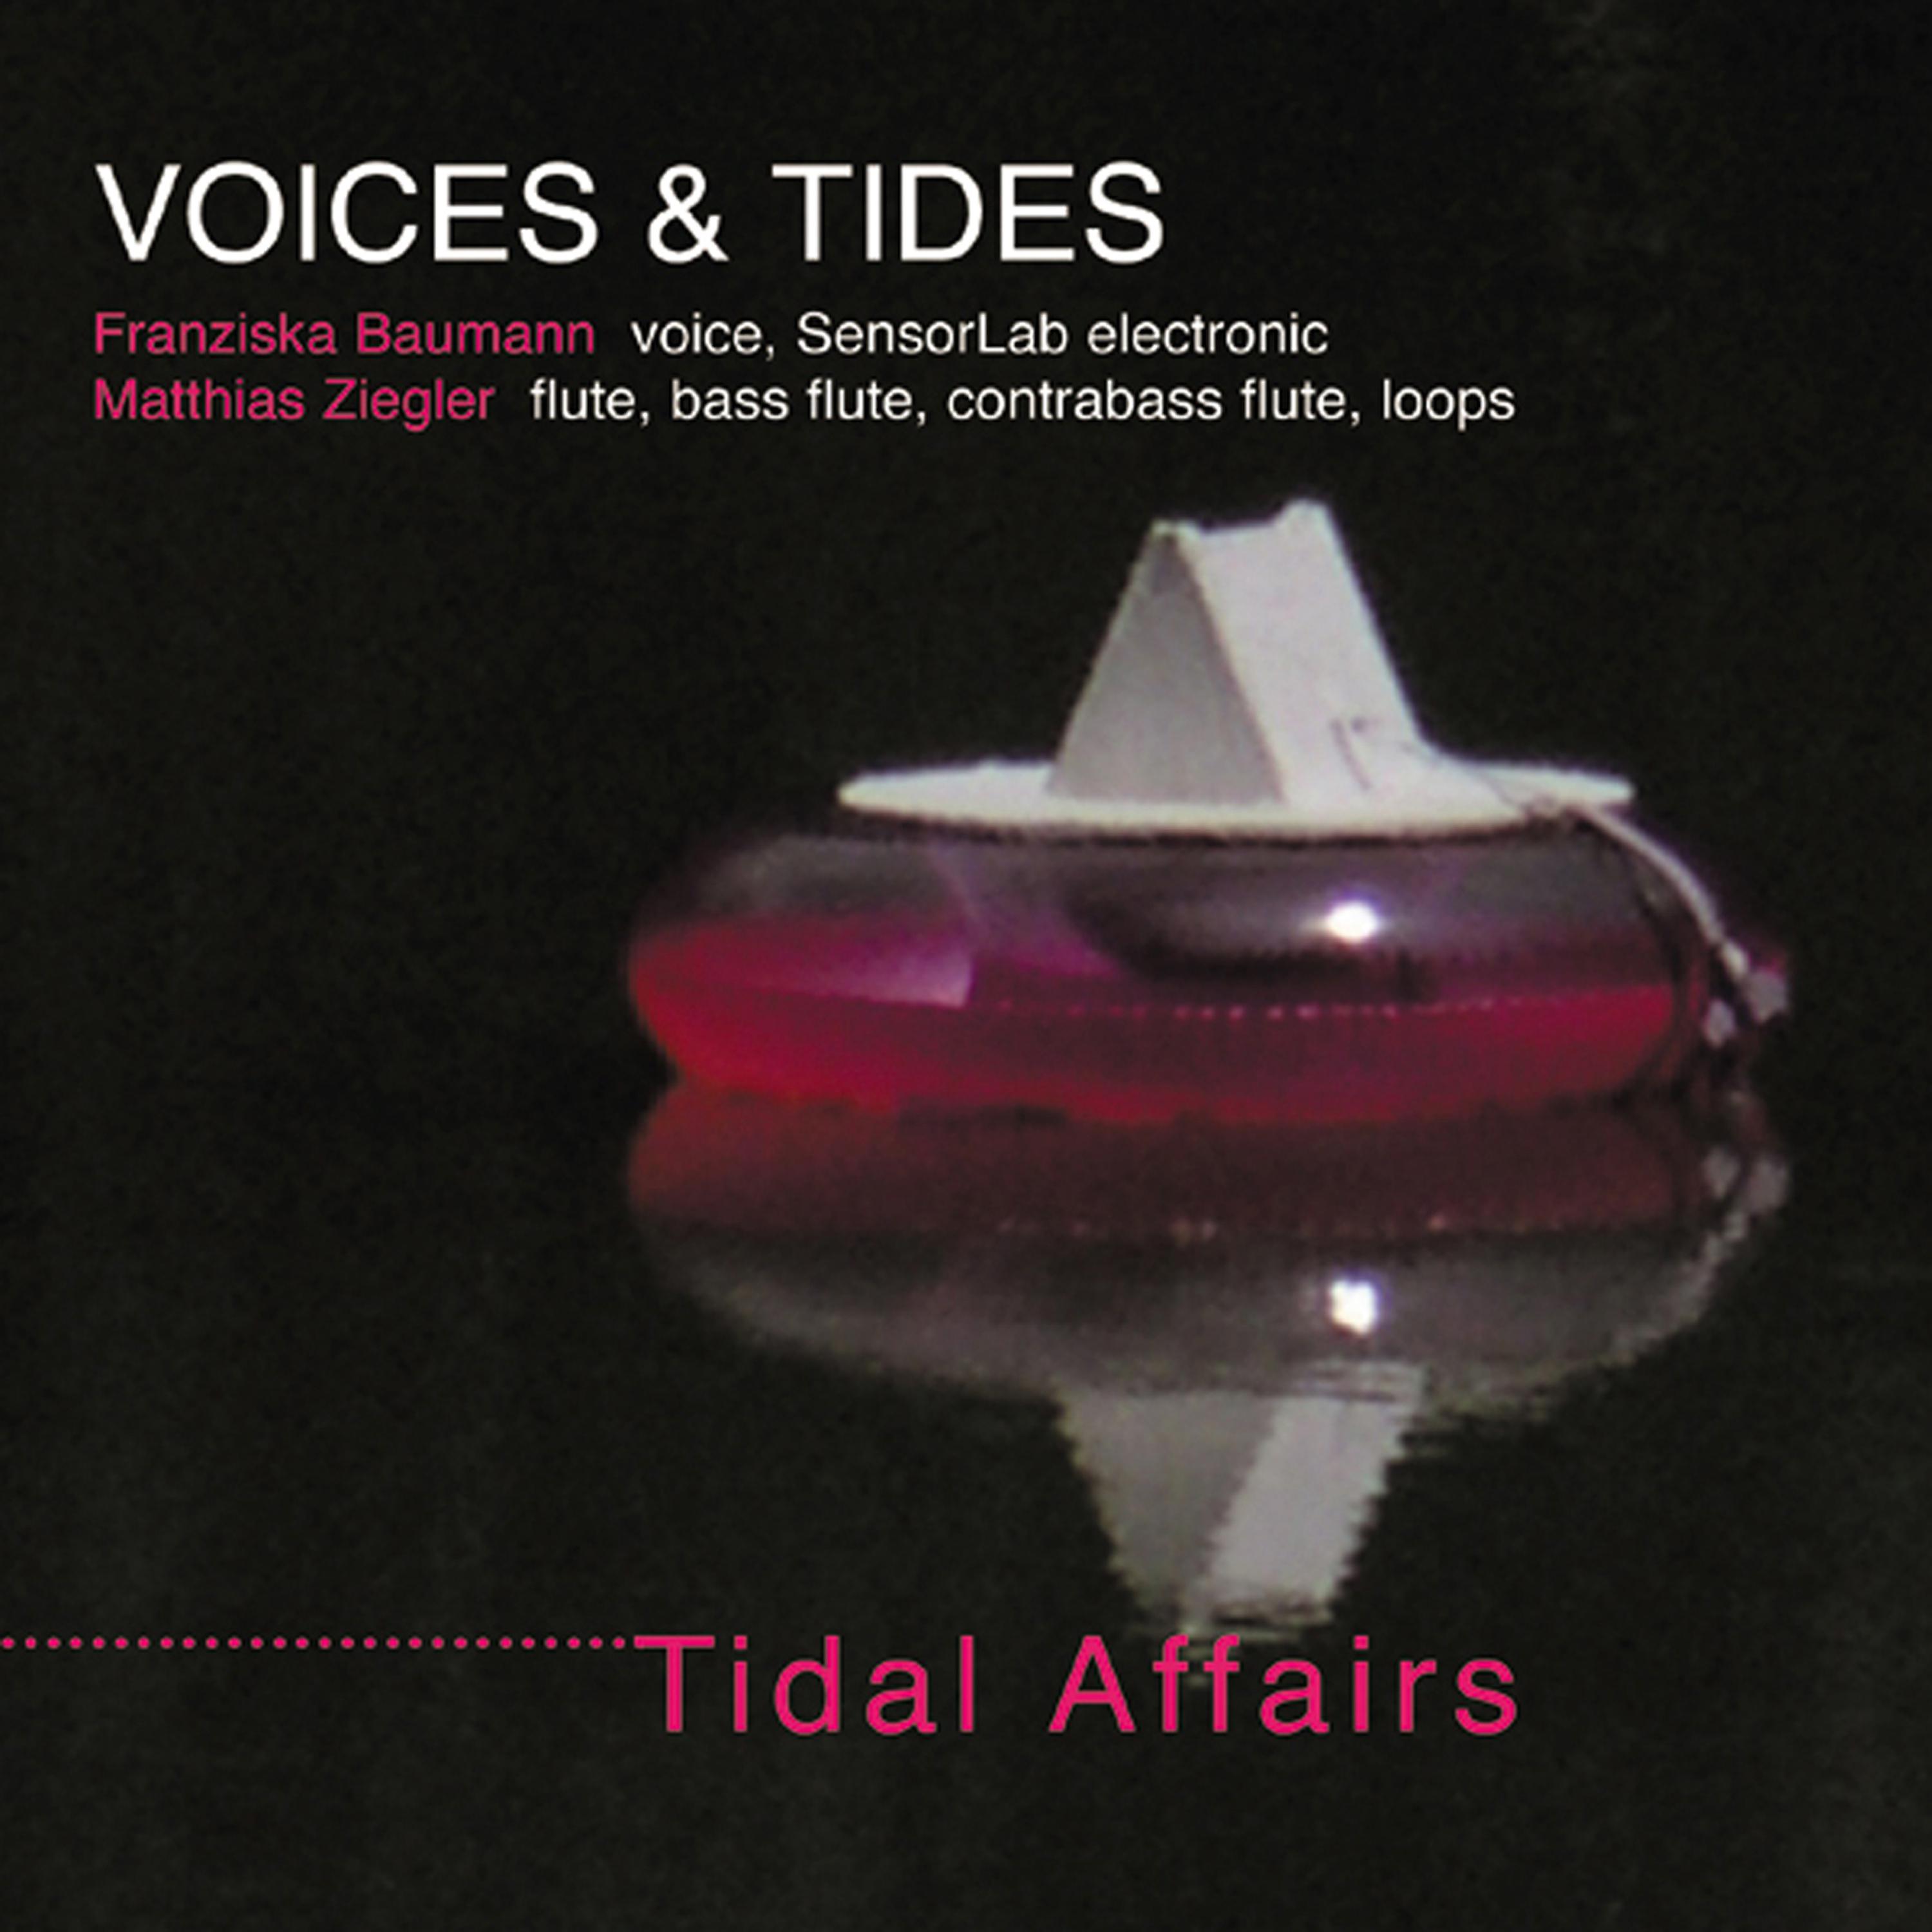 Постер альбома Voices & Tides - Tidal Affairs